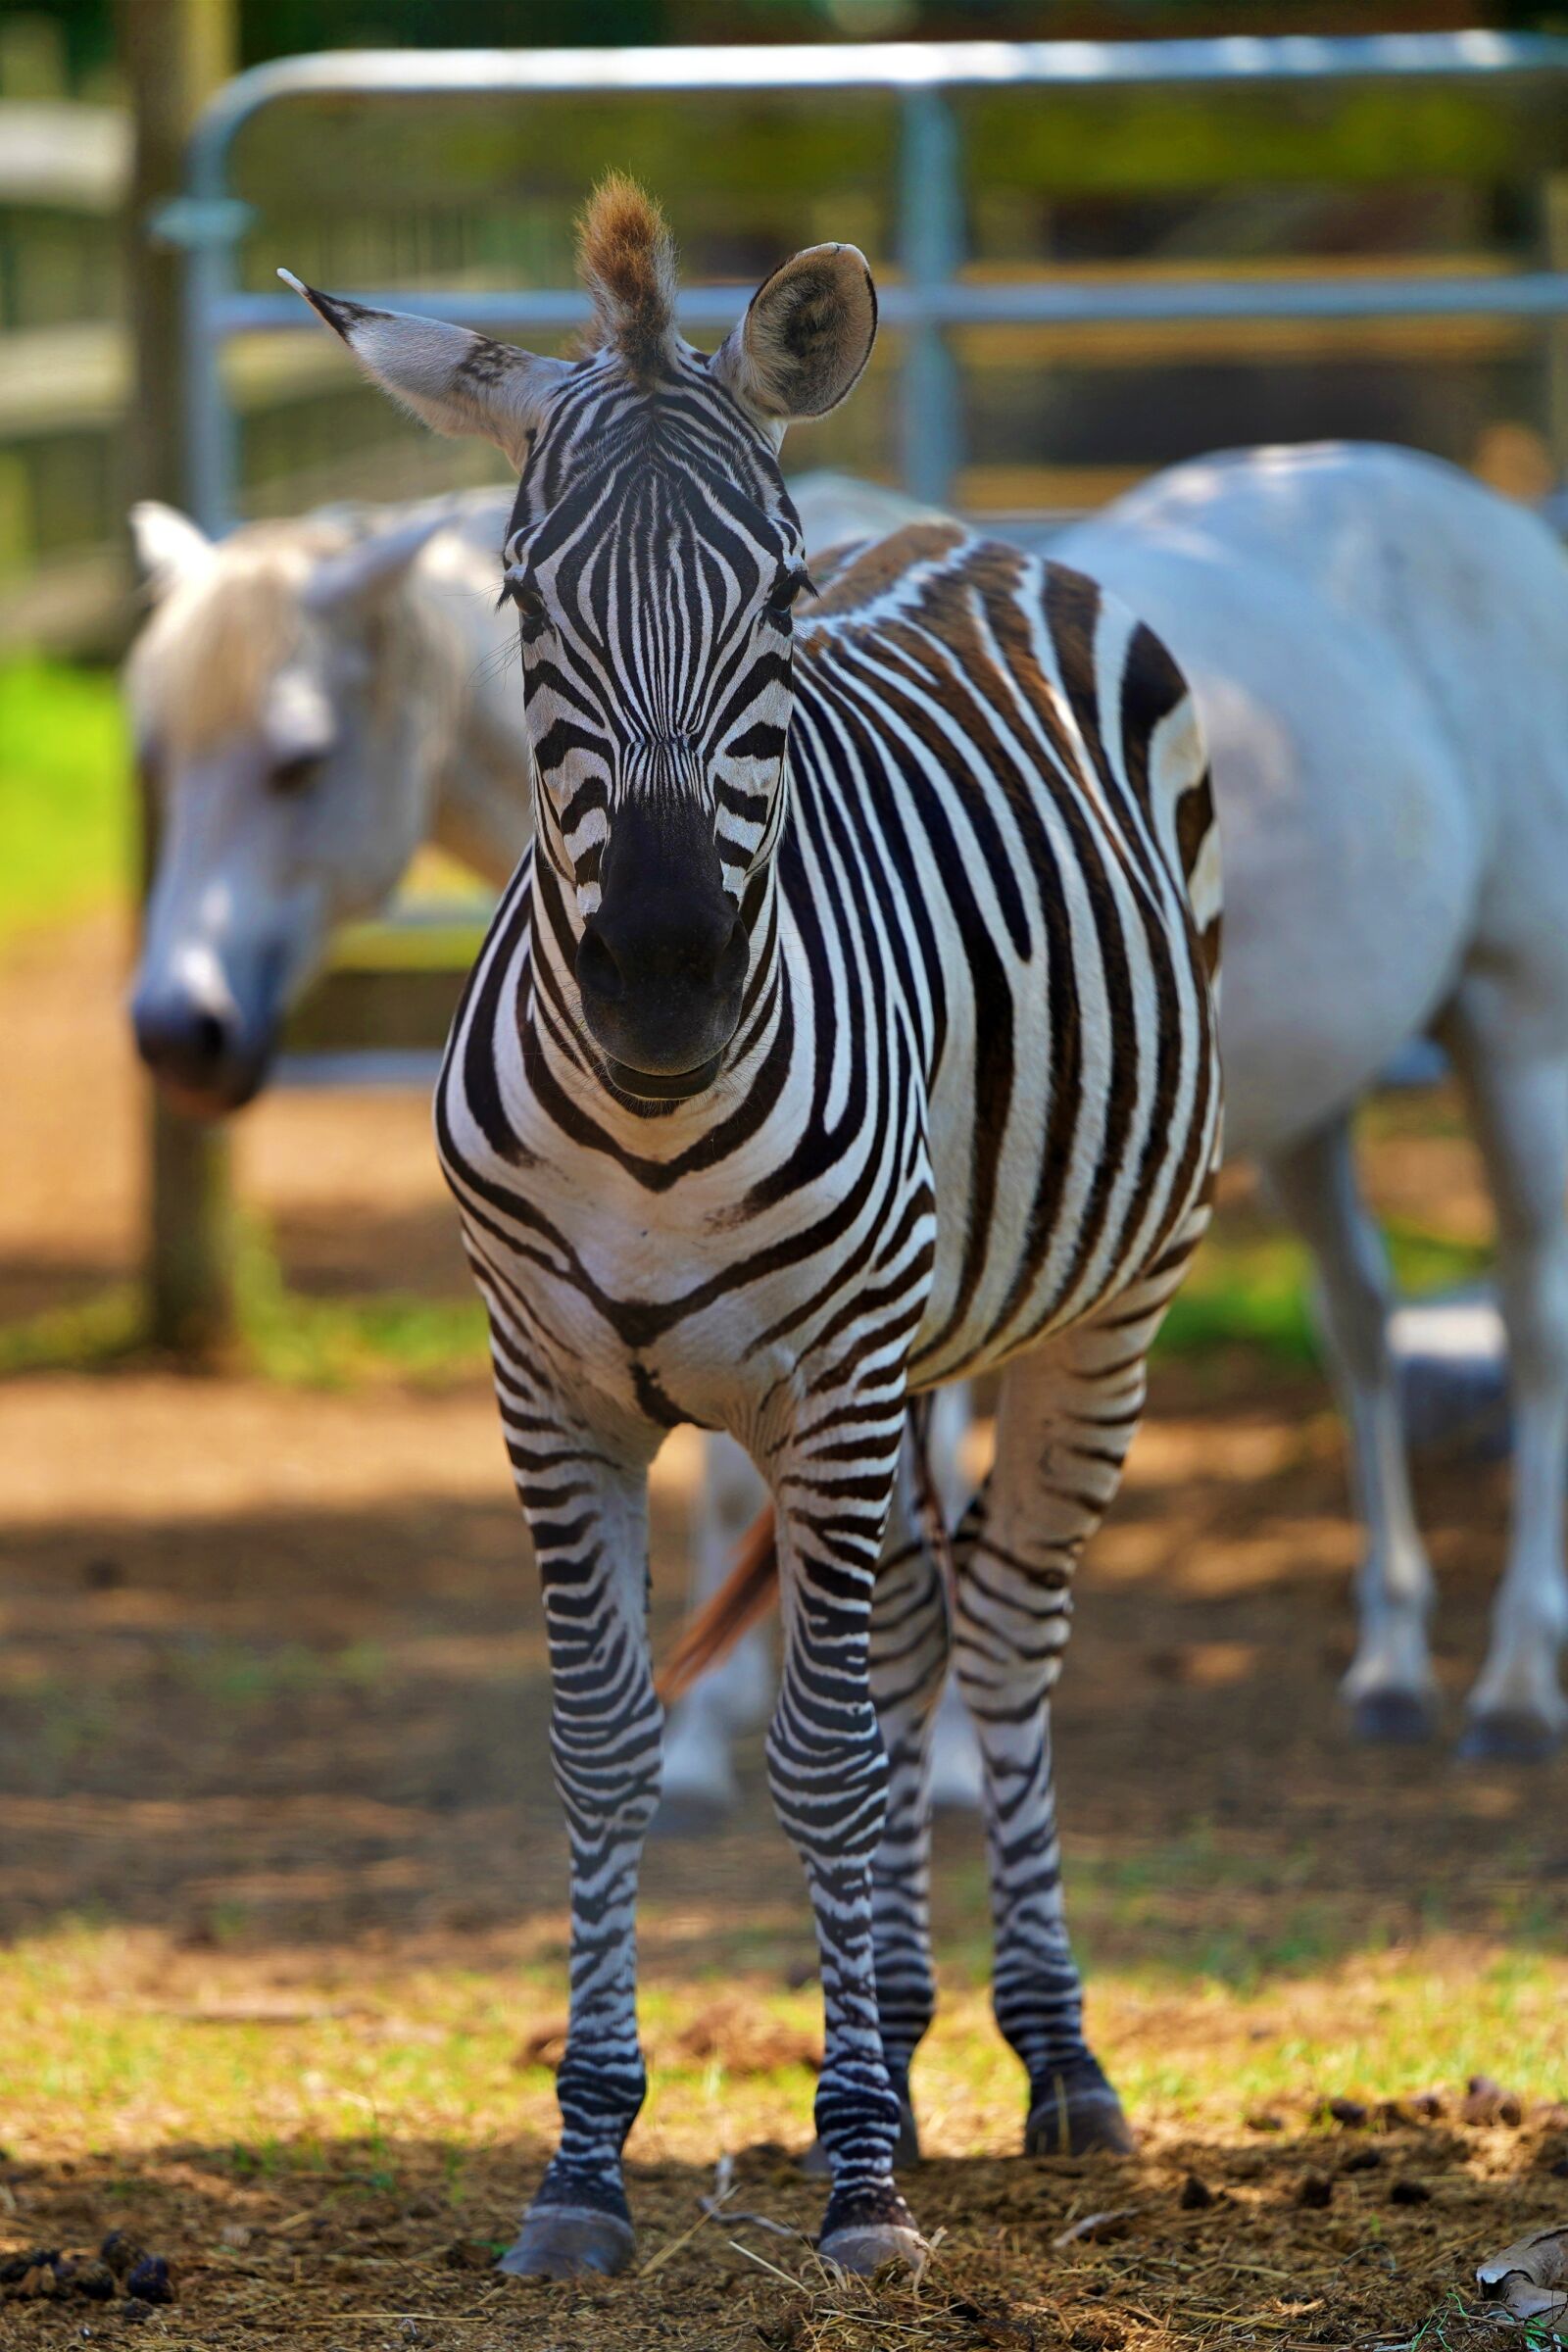 Sony a7 III sample photo. Zebra, animal, africa photography